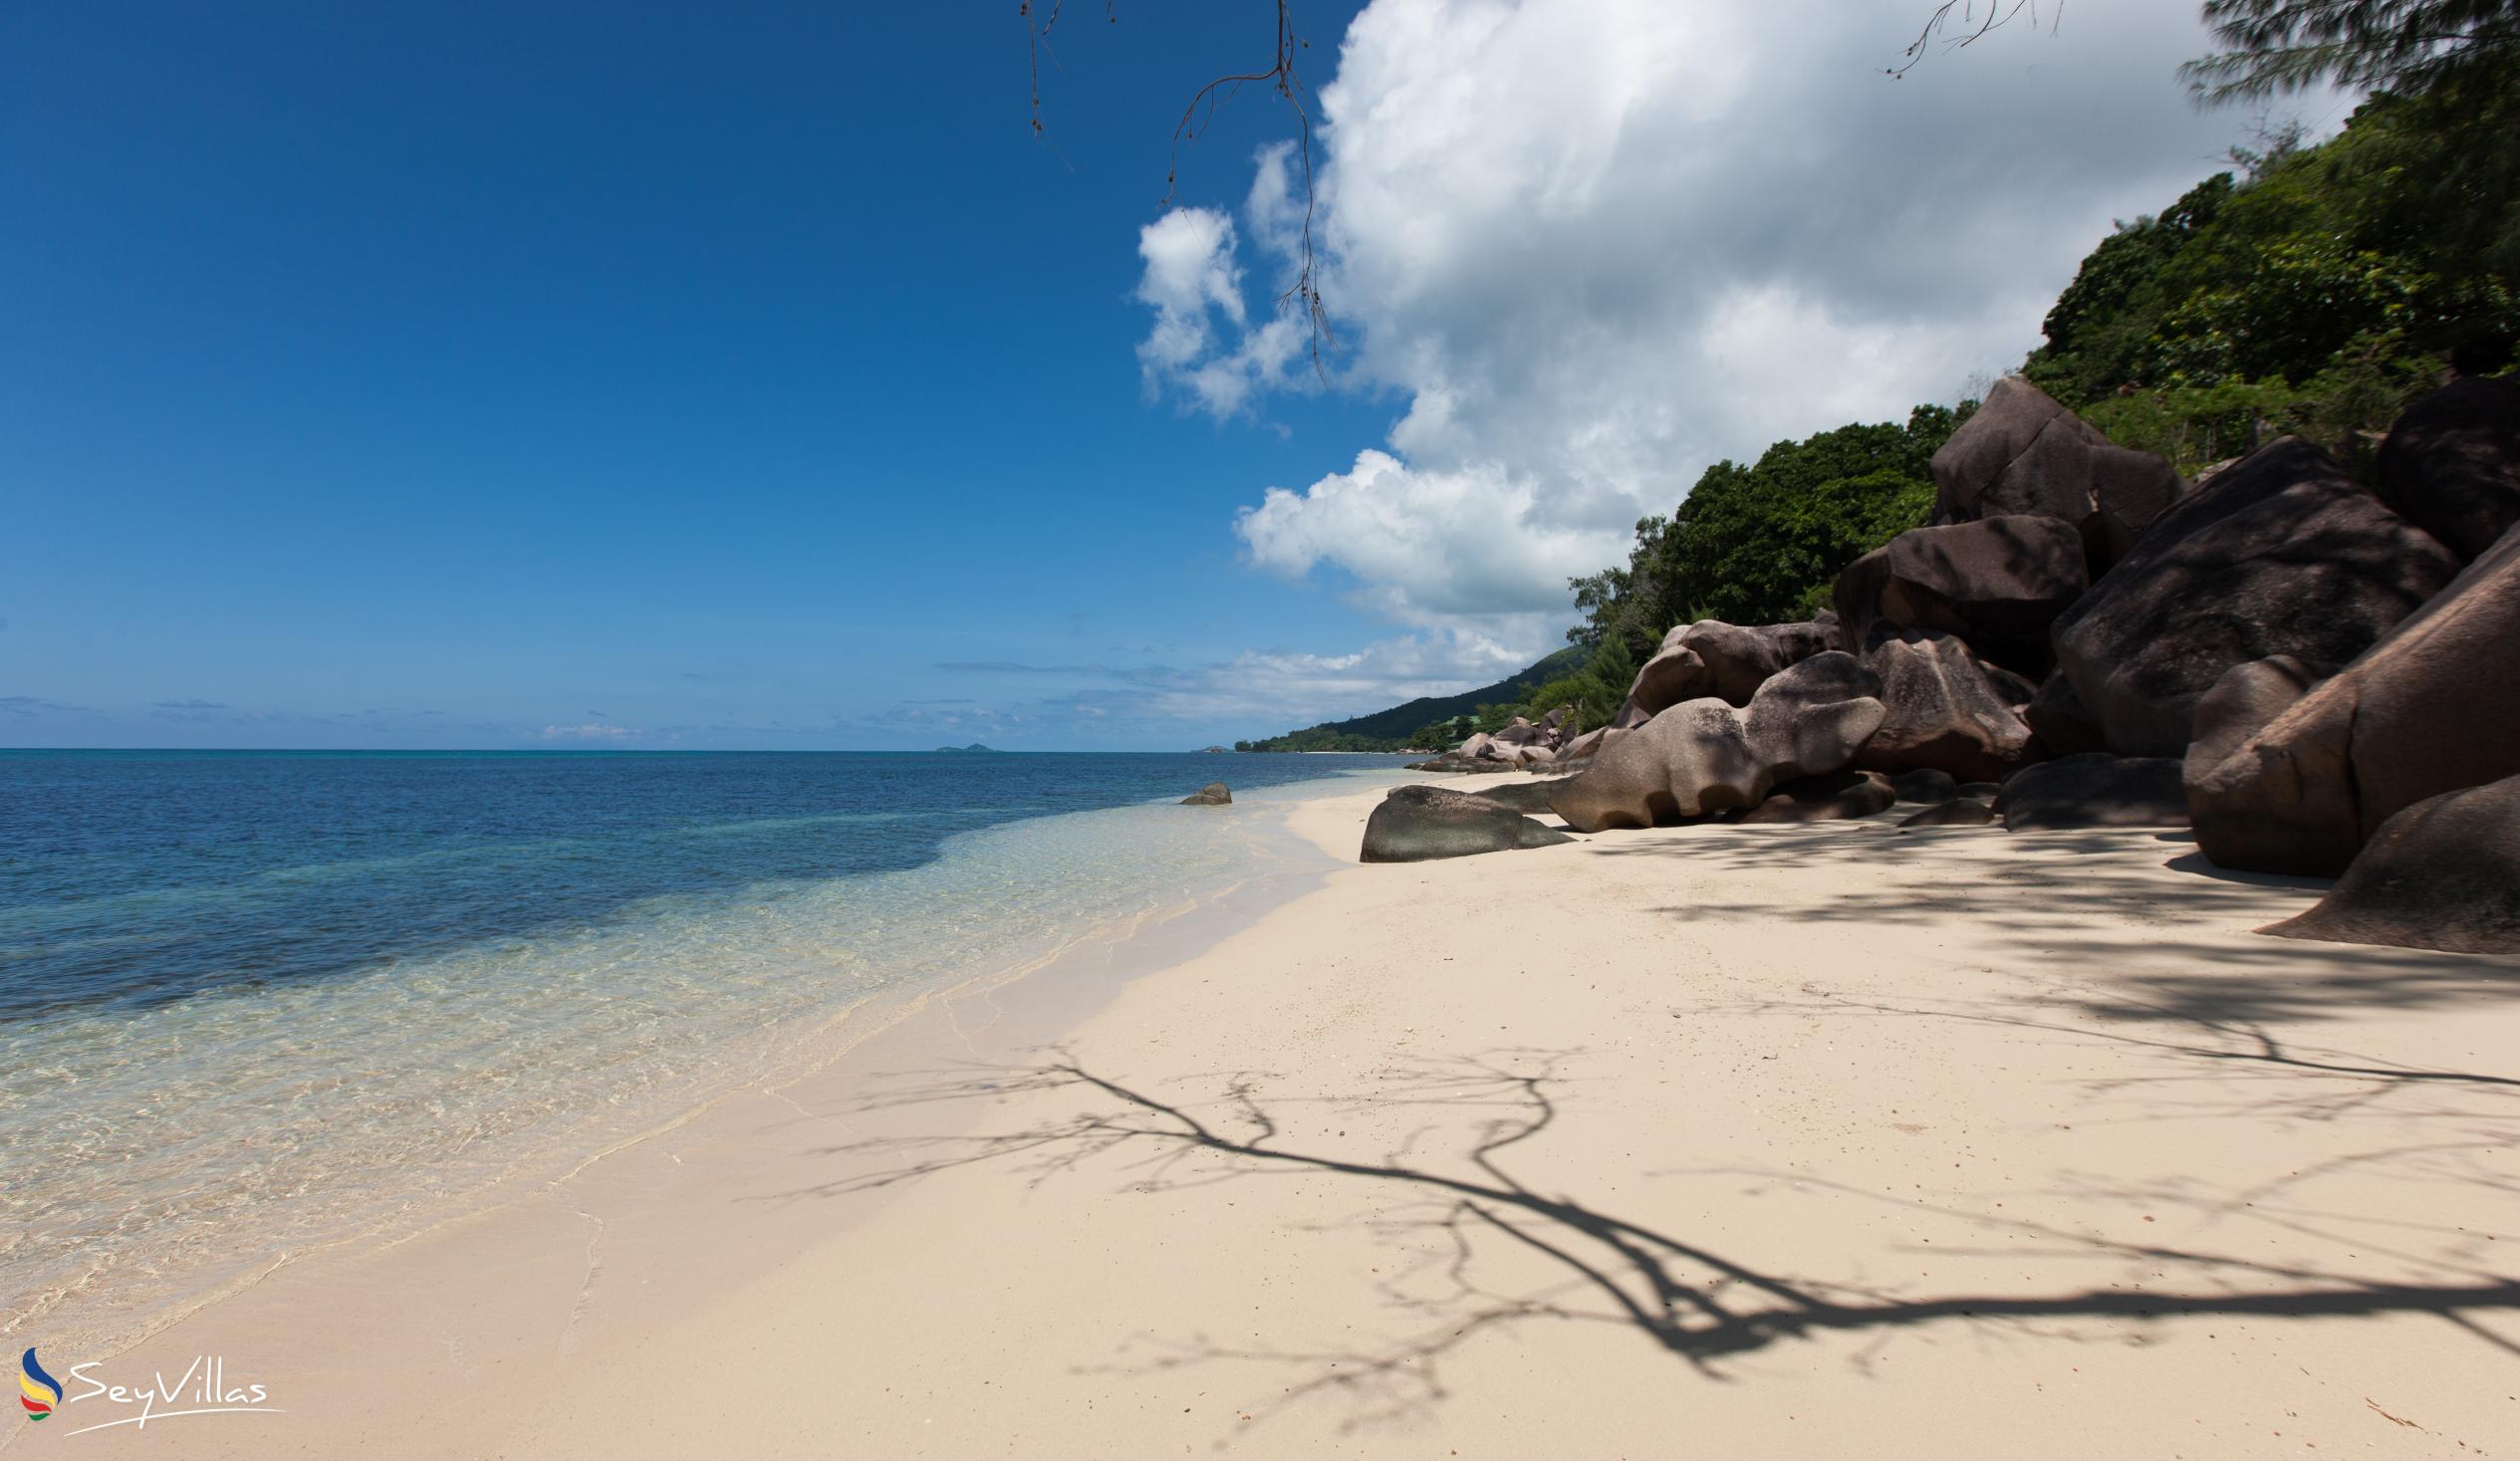 Photo 4: Anse Bois de Rose - Praslin (Seychelles)